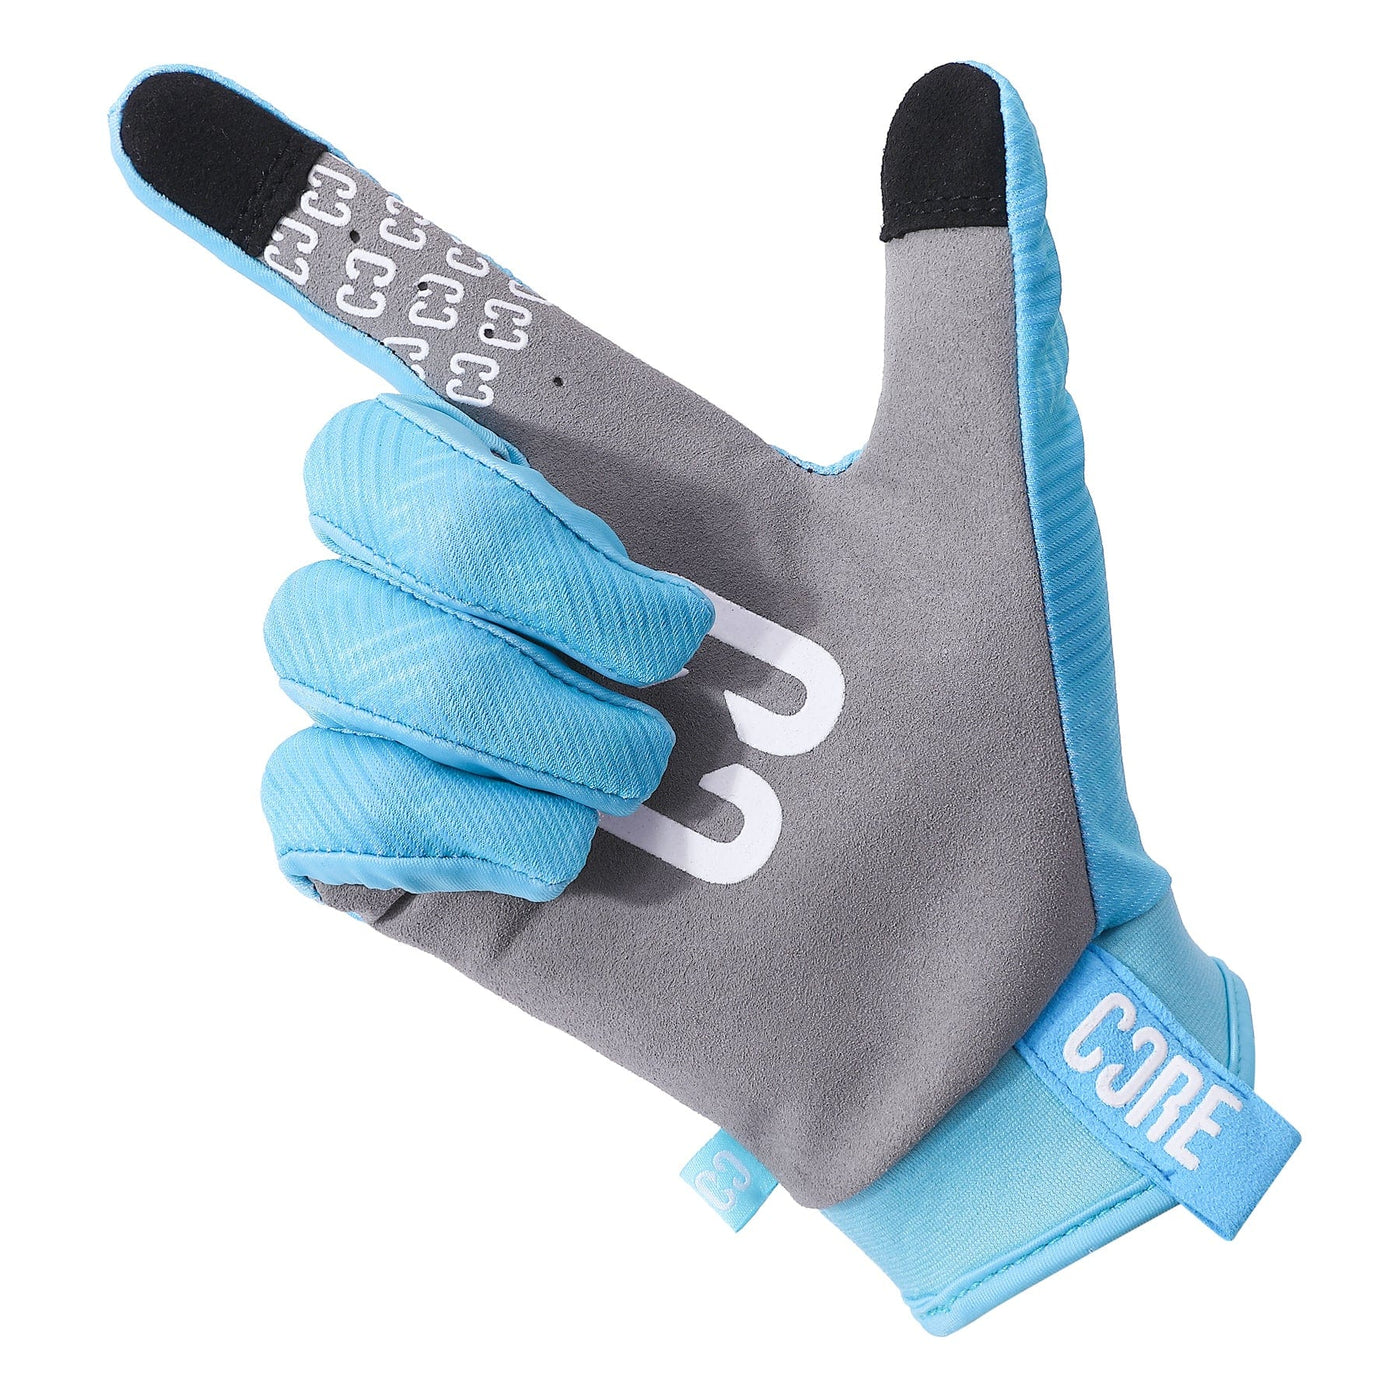 CORE Protection Aero BMX Gloves Teal I Bike Gloves Point